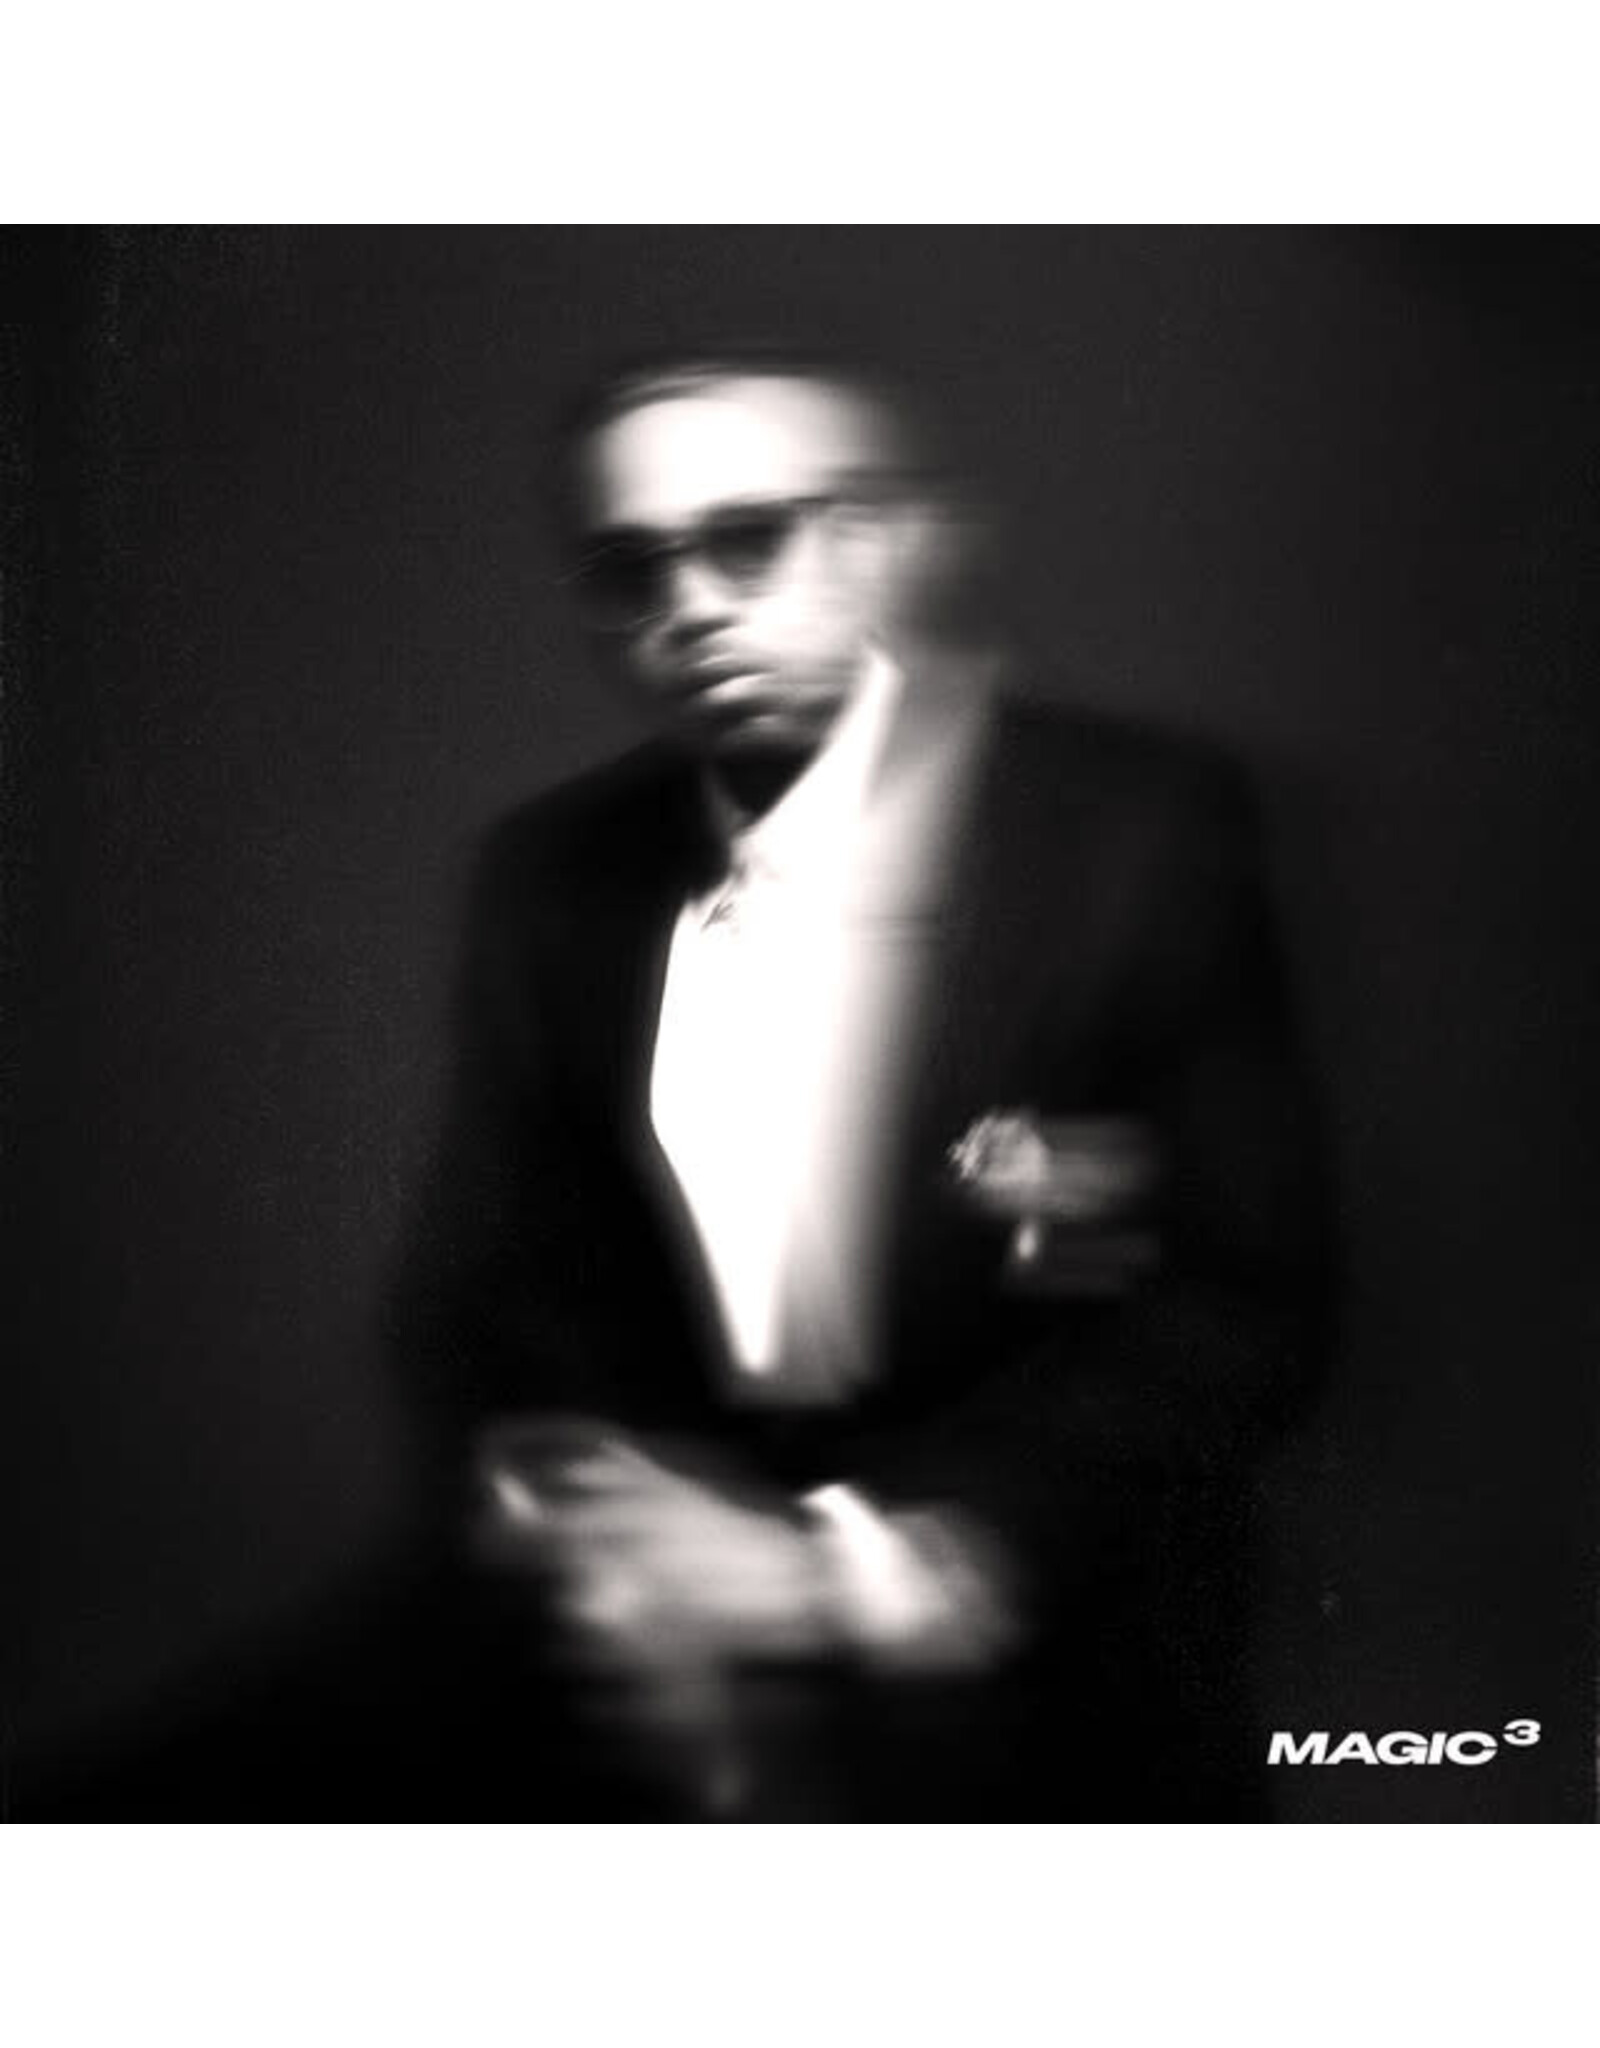 Nas - Magic 3 (Black / White Striped Vinyl)